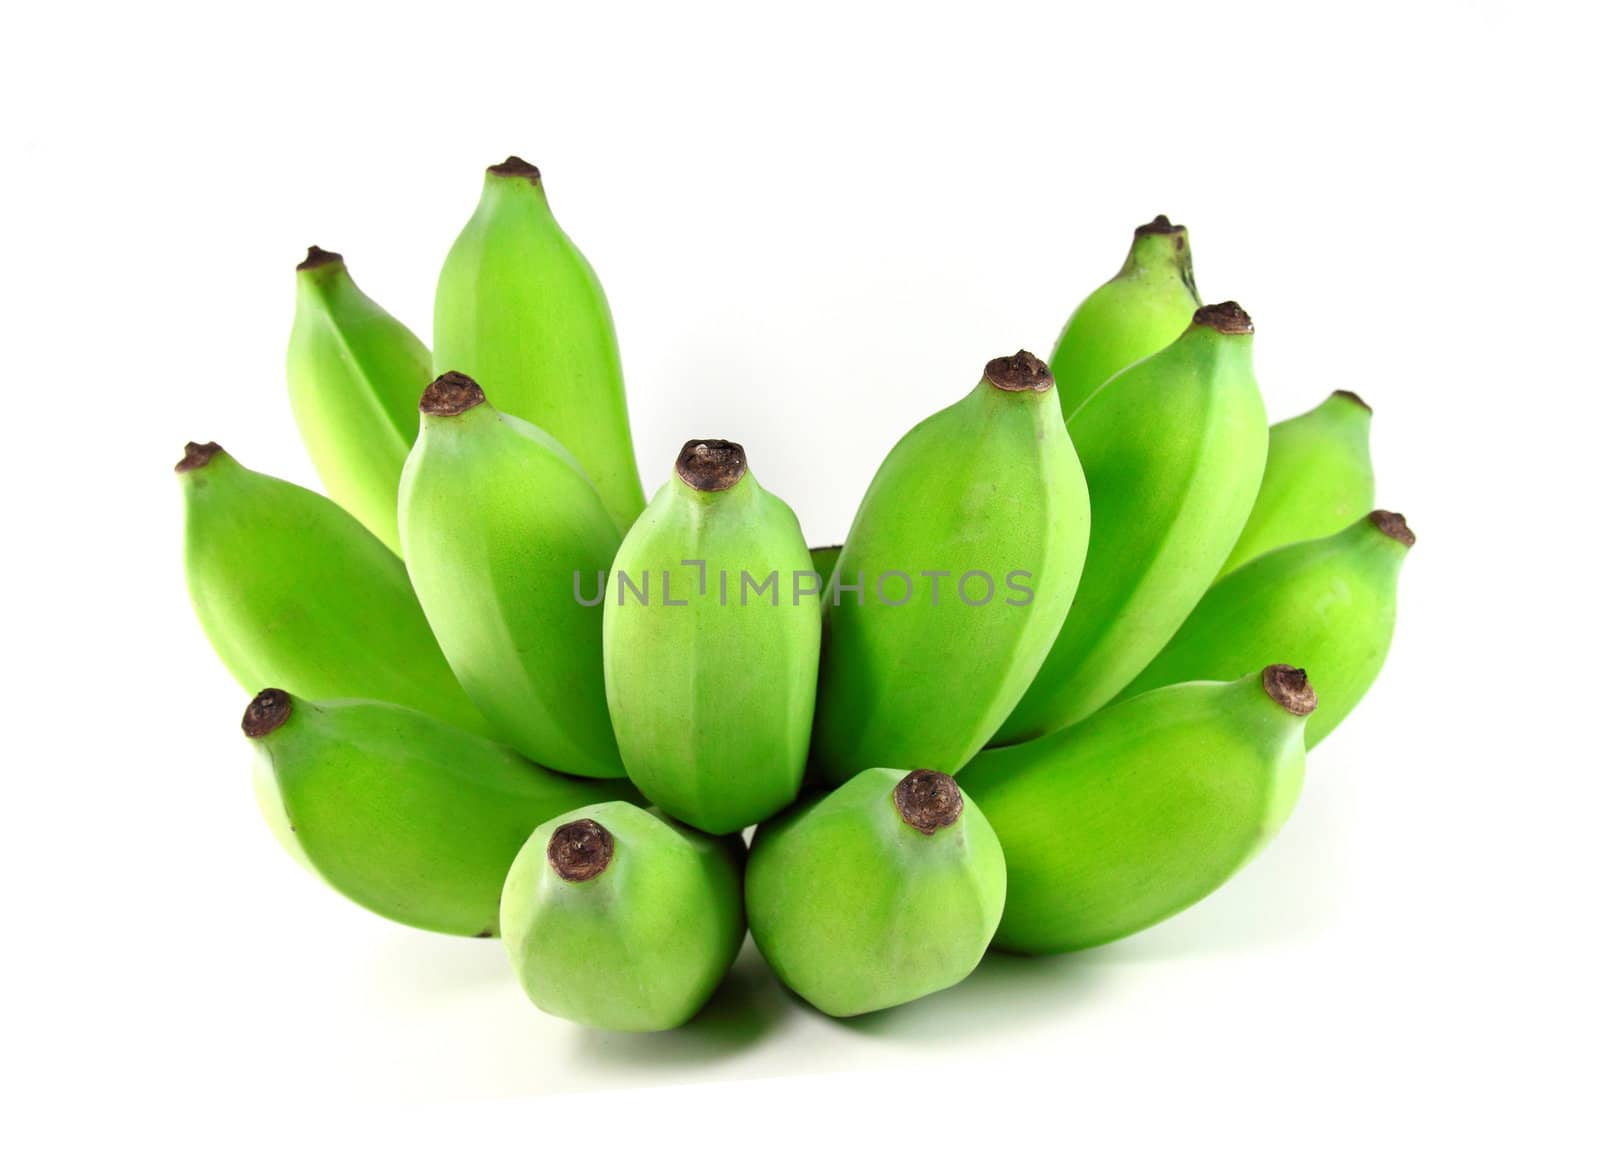 Green banana on white background